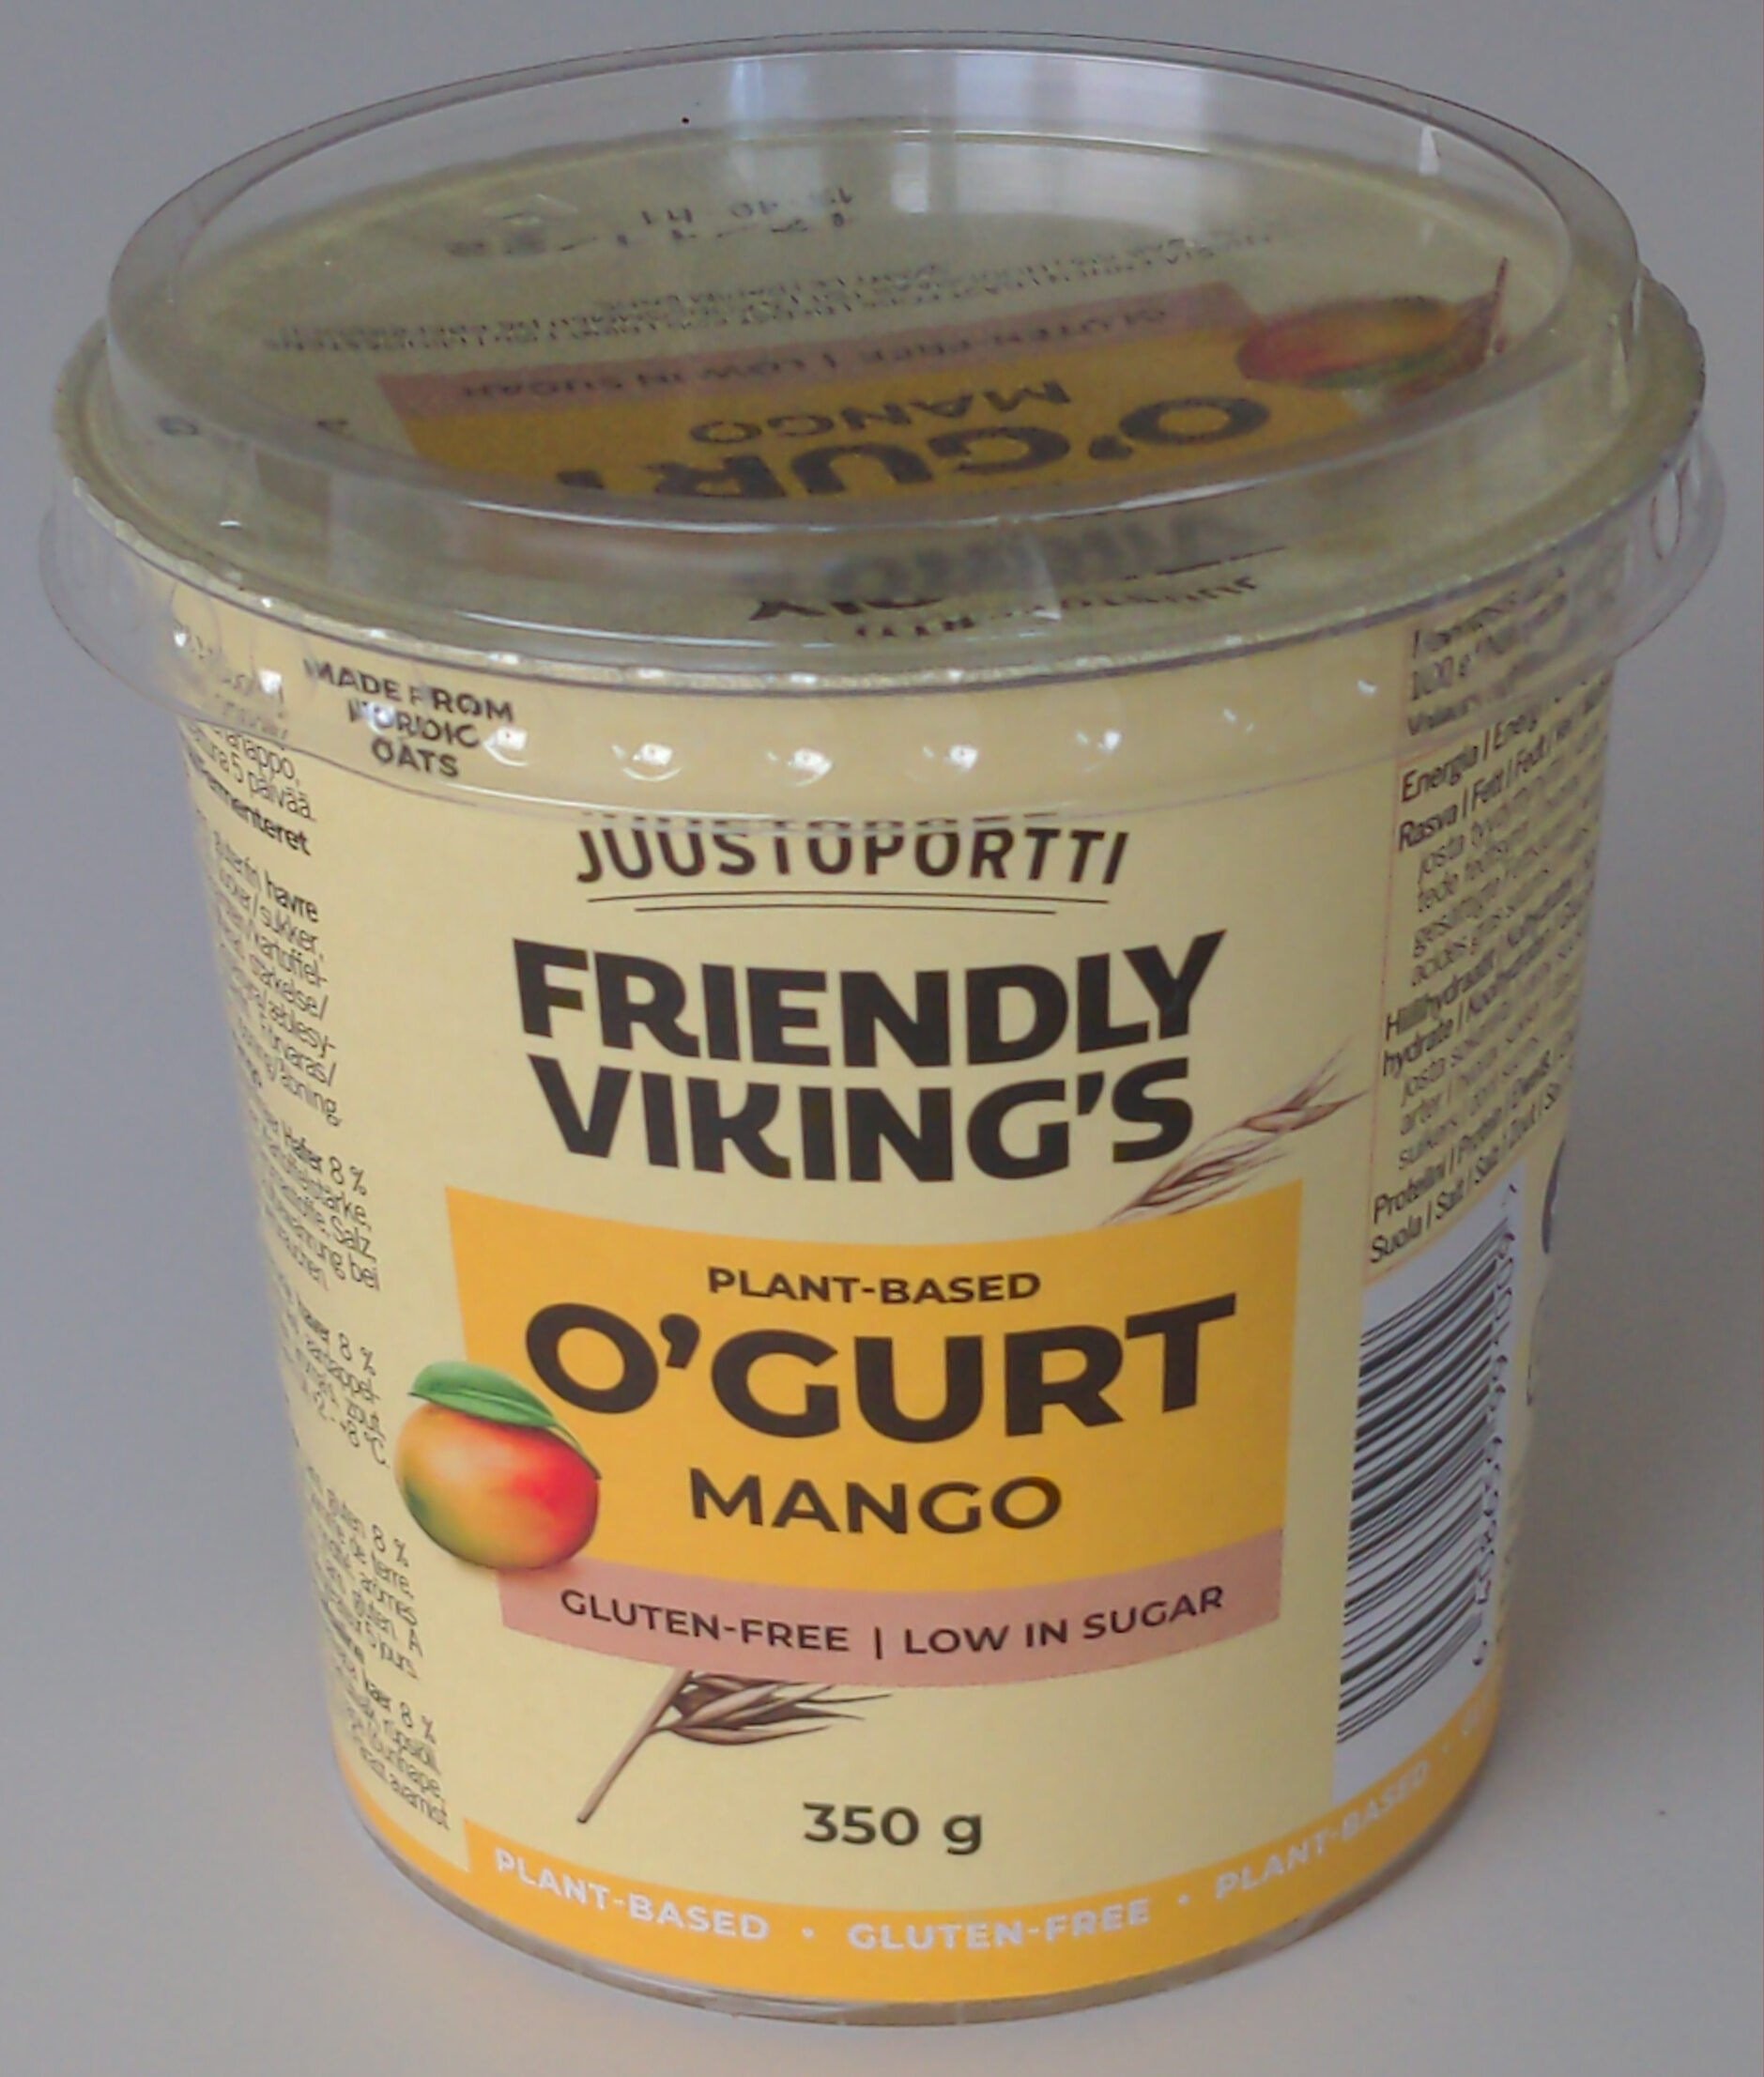 O'gurt mango - Tuote